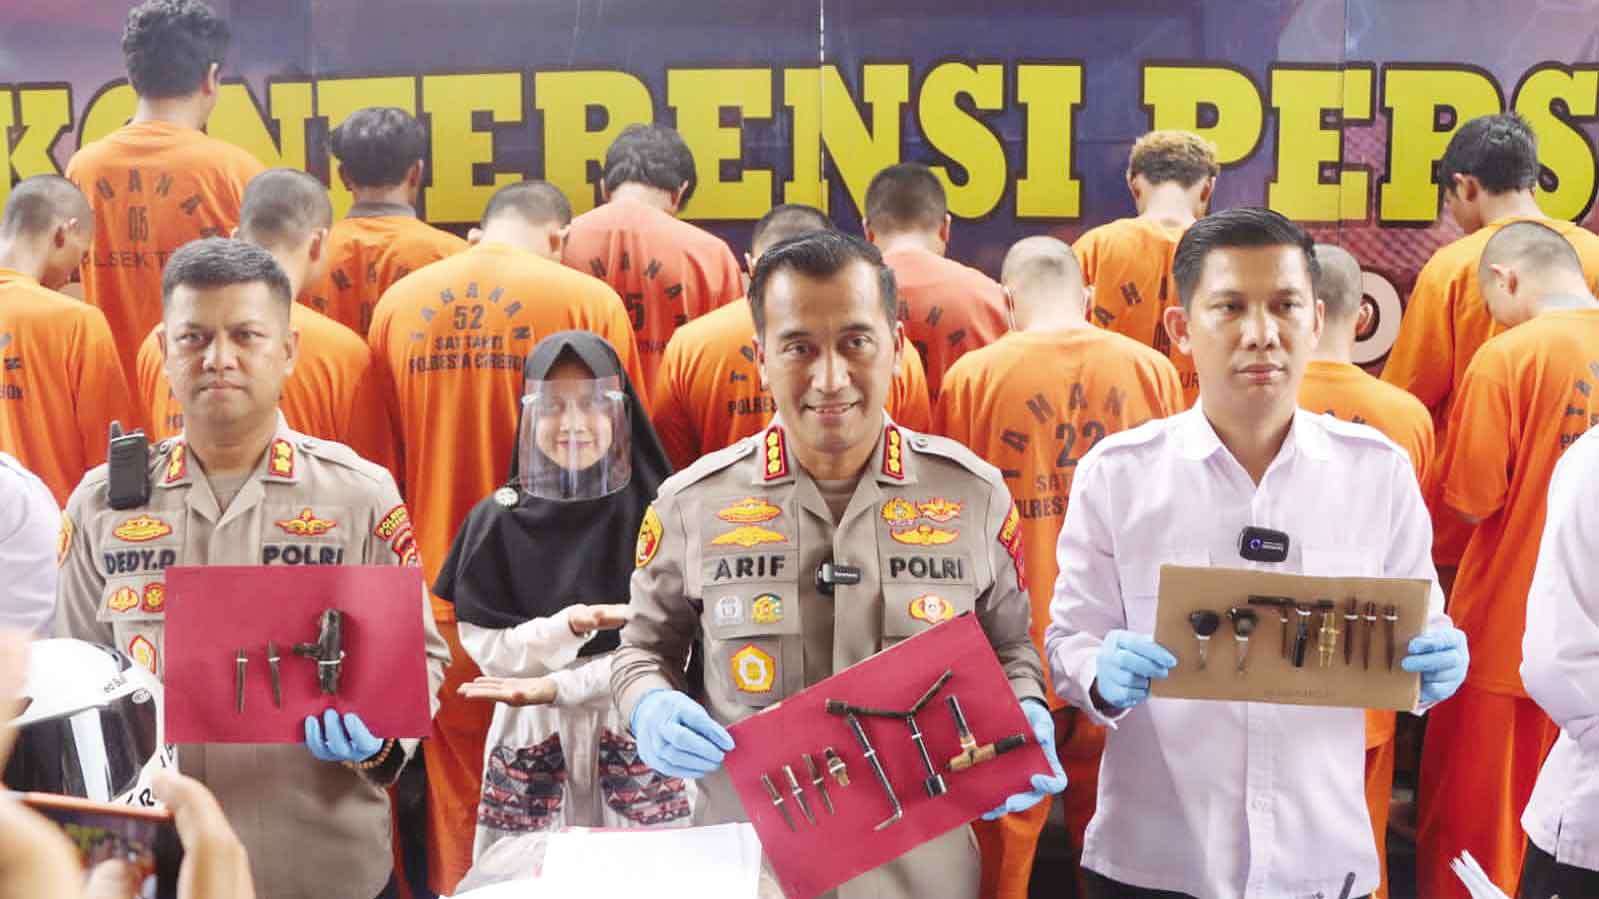 Sebulan Polresta Cirebon Ungkap 12 Kasus Pencurian, Amankan 24 Tersangka dan Barang Bukti 14 Unit Sepeda Motor